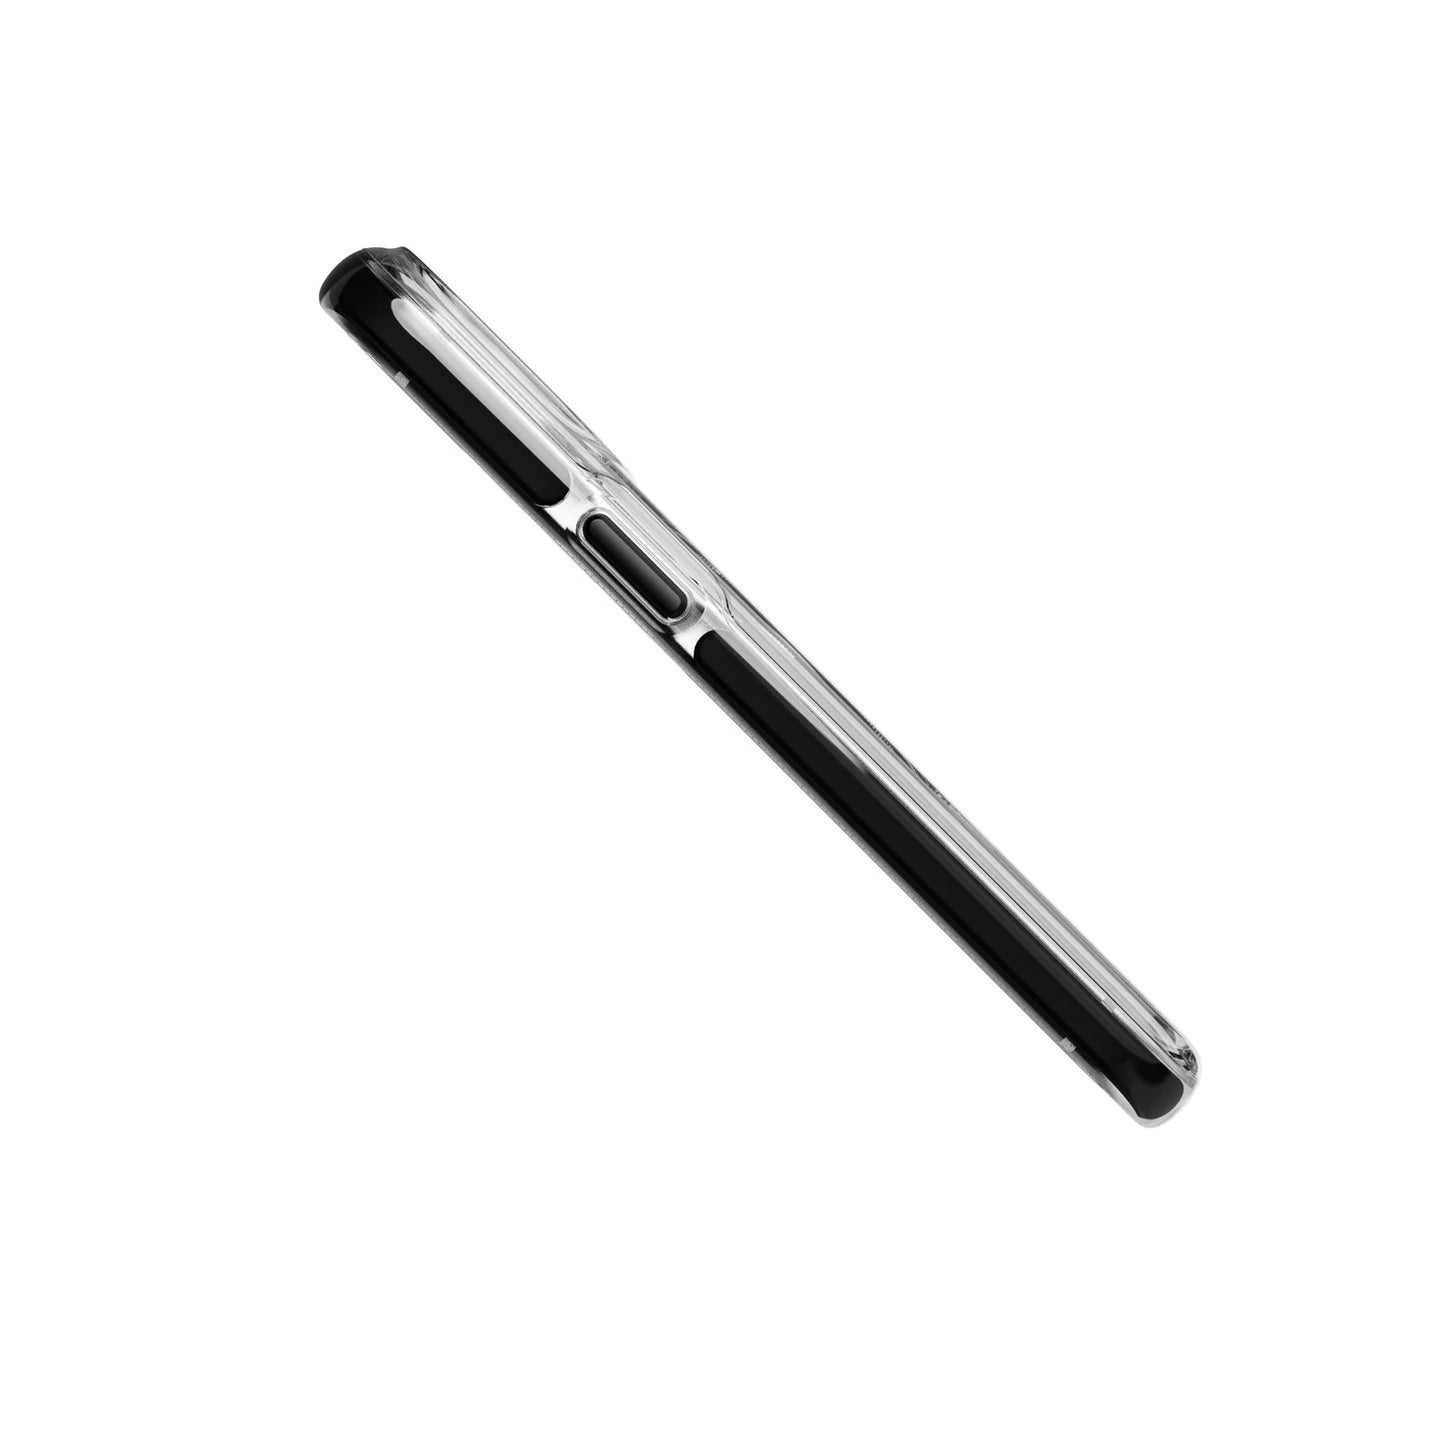 Tech21 Evo Crystal avec MagSafe pour iPhone 15 Pro Max - Noir